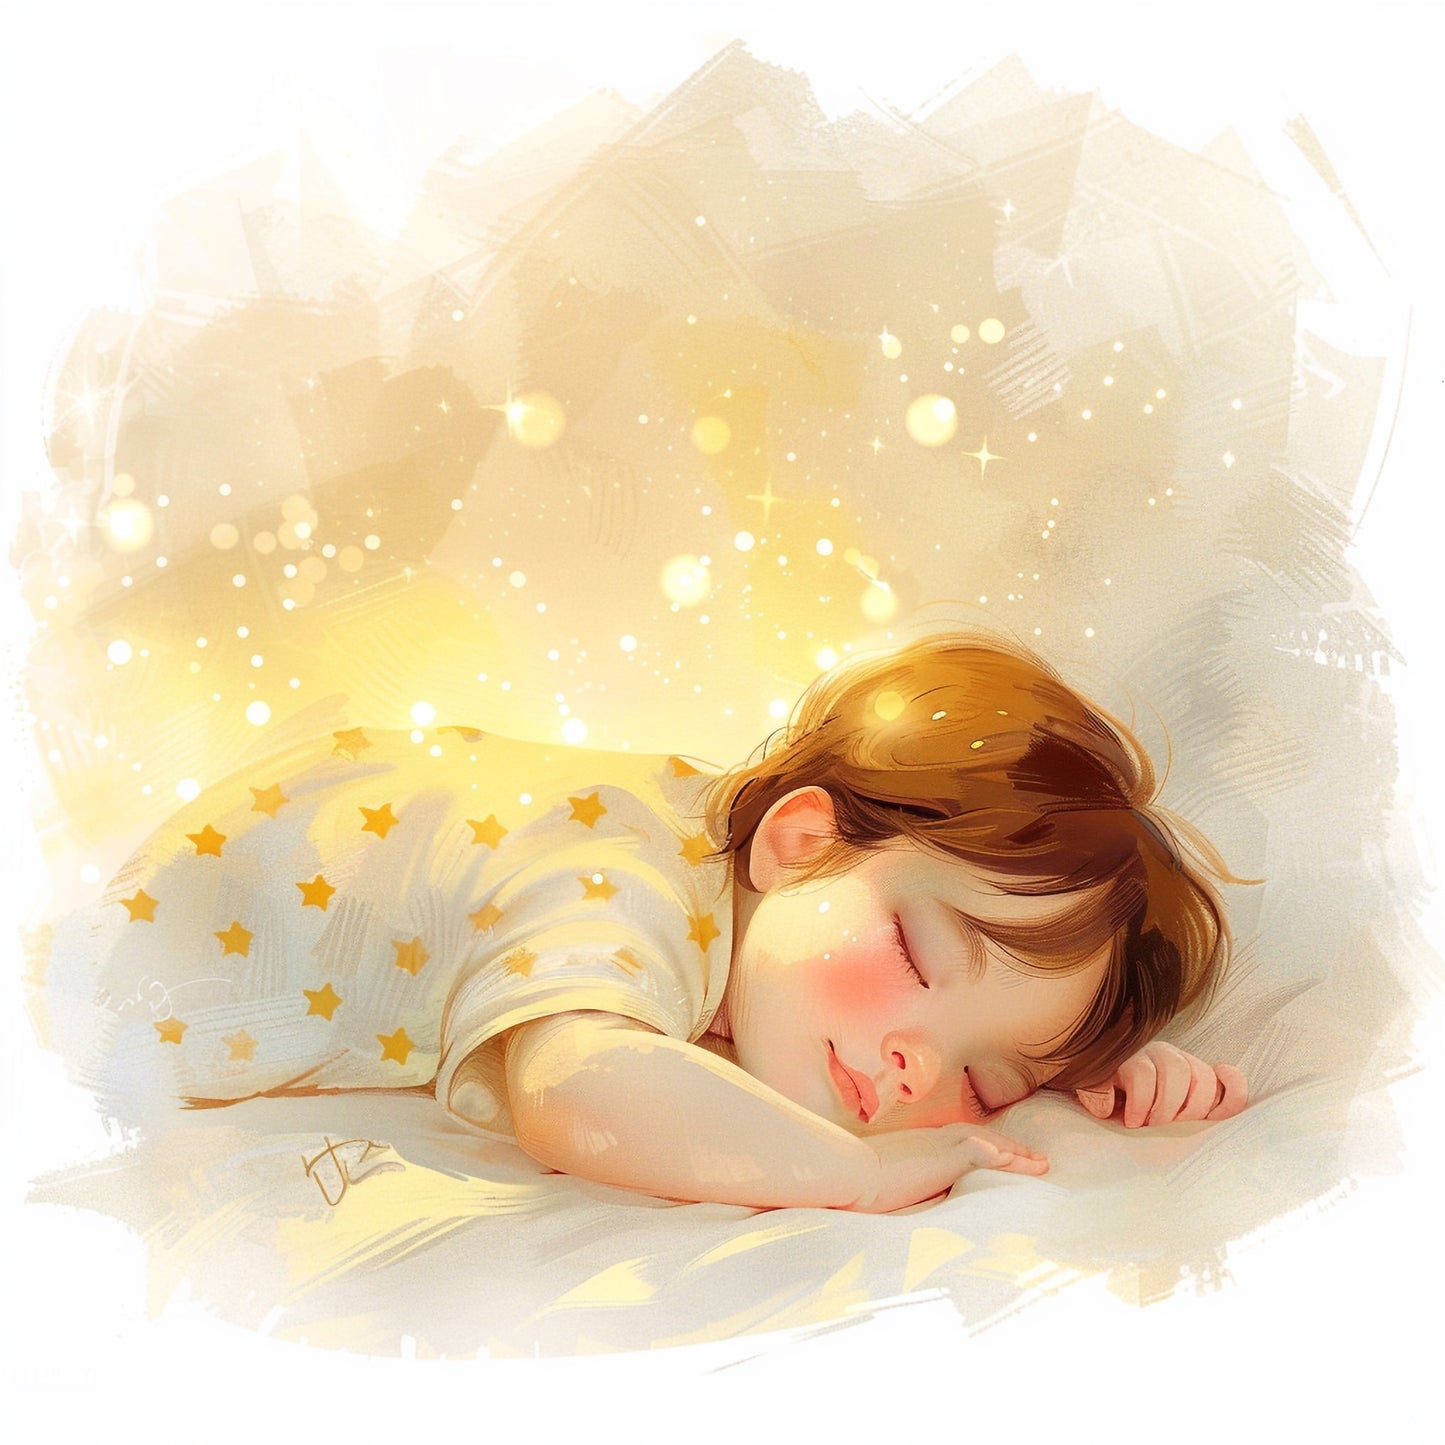 Peaceful Sleeping Baby Girl Illustration with Stars